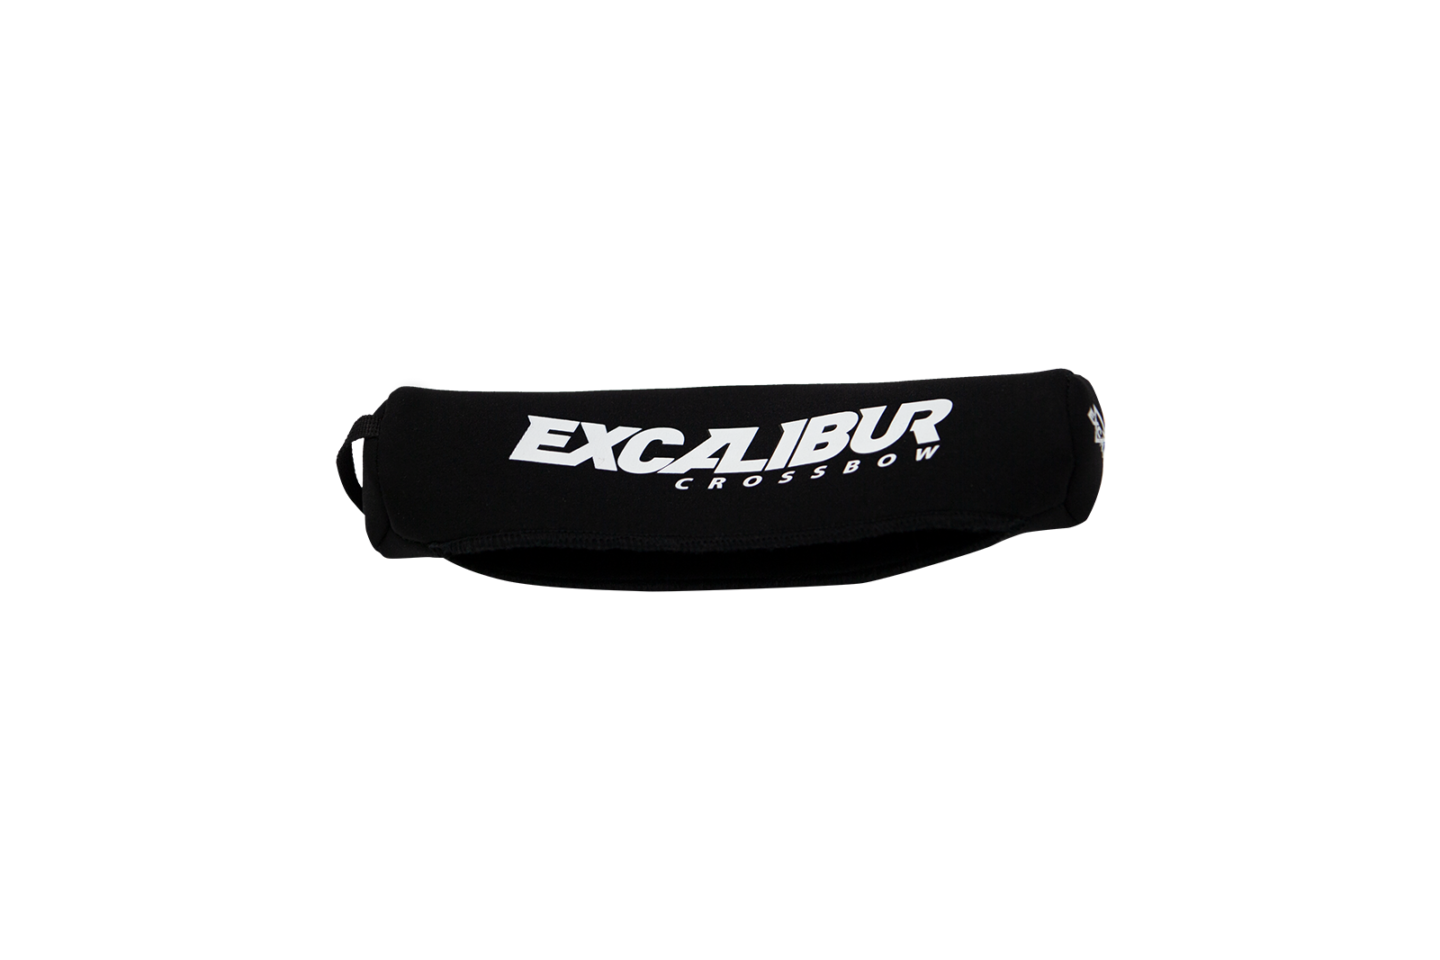 Excalibur Over Scope Cover